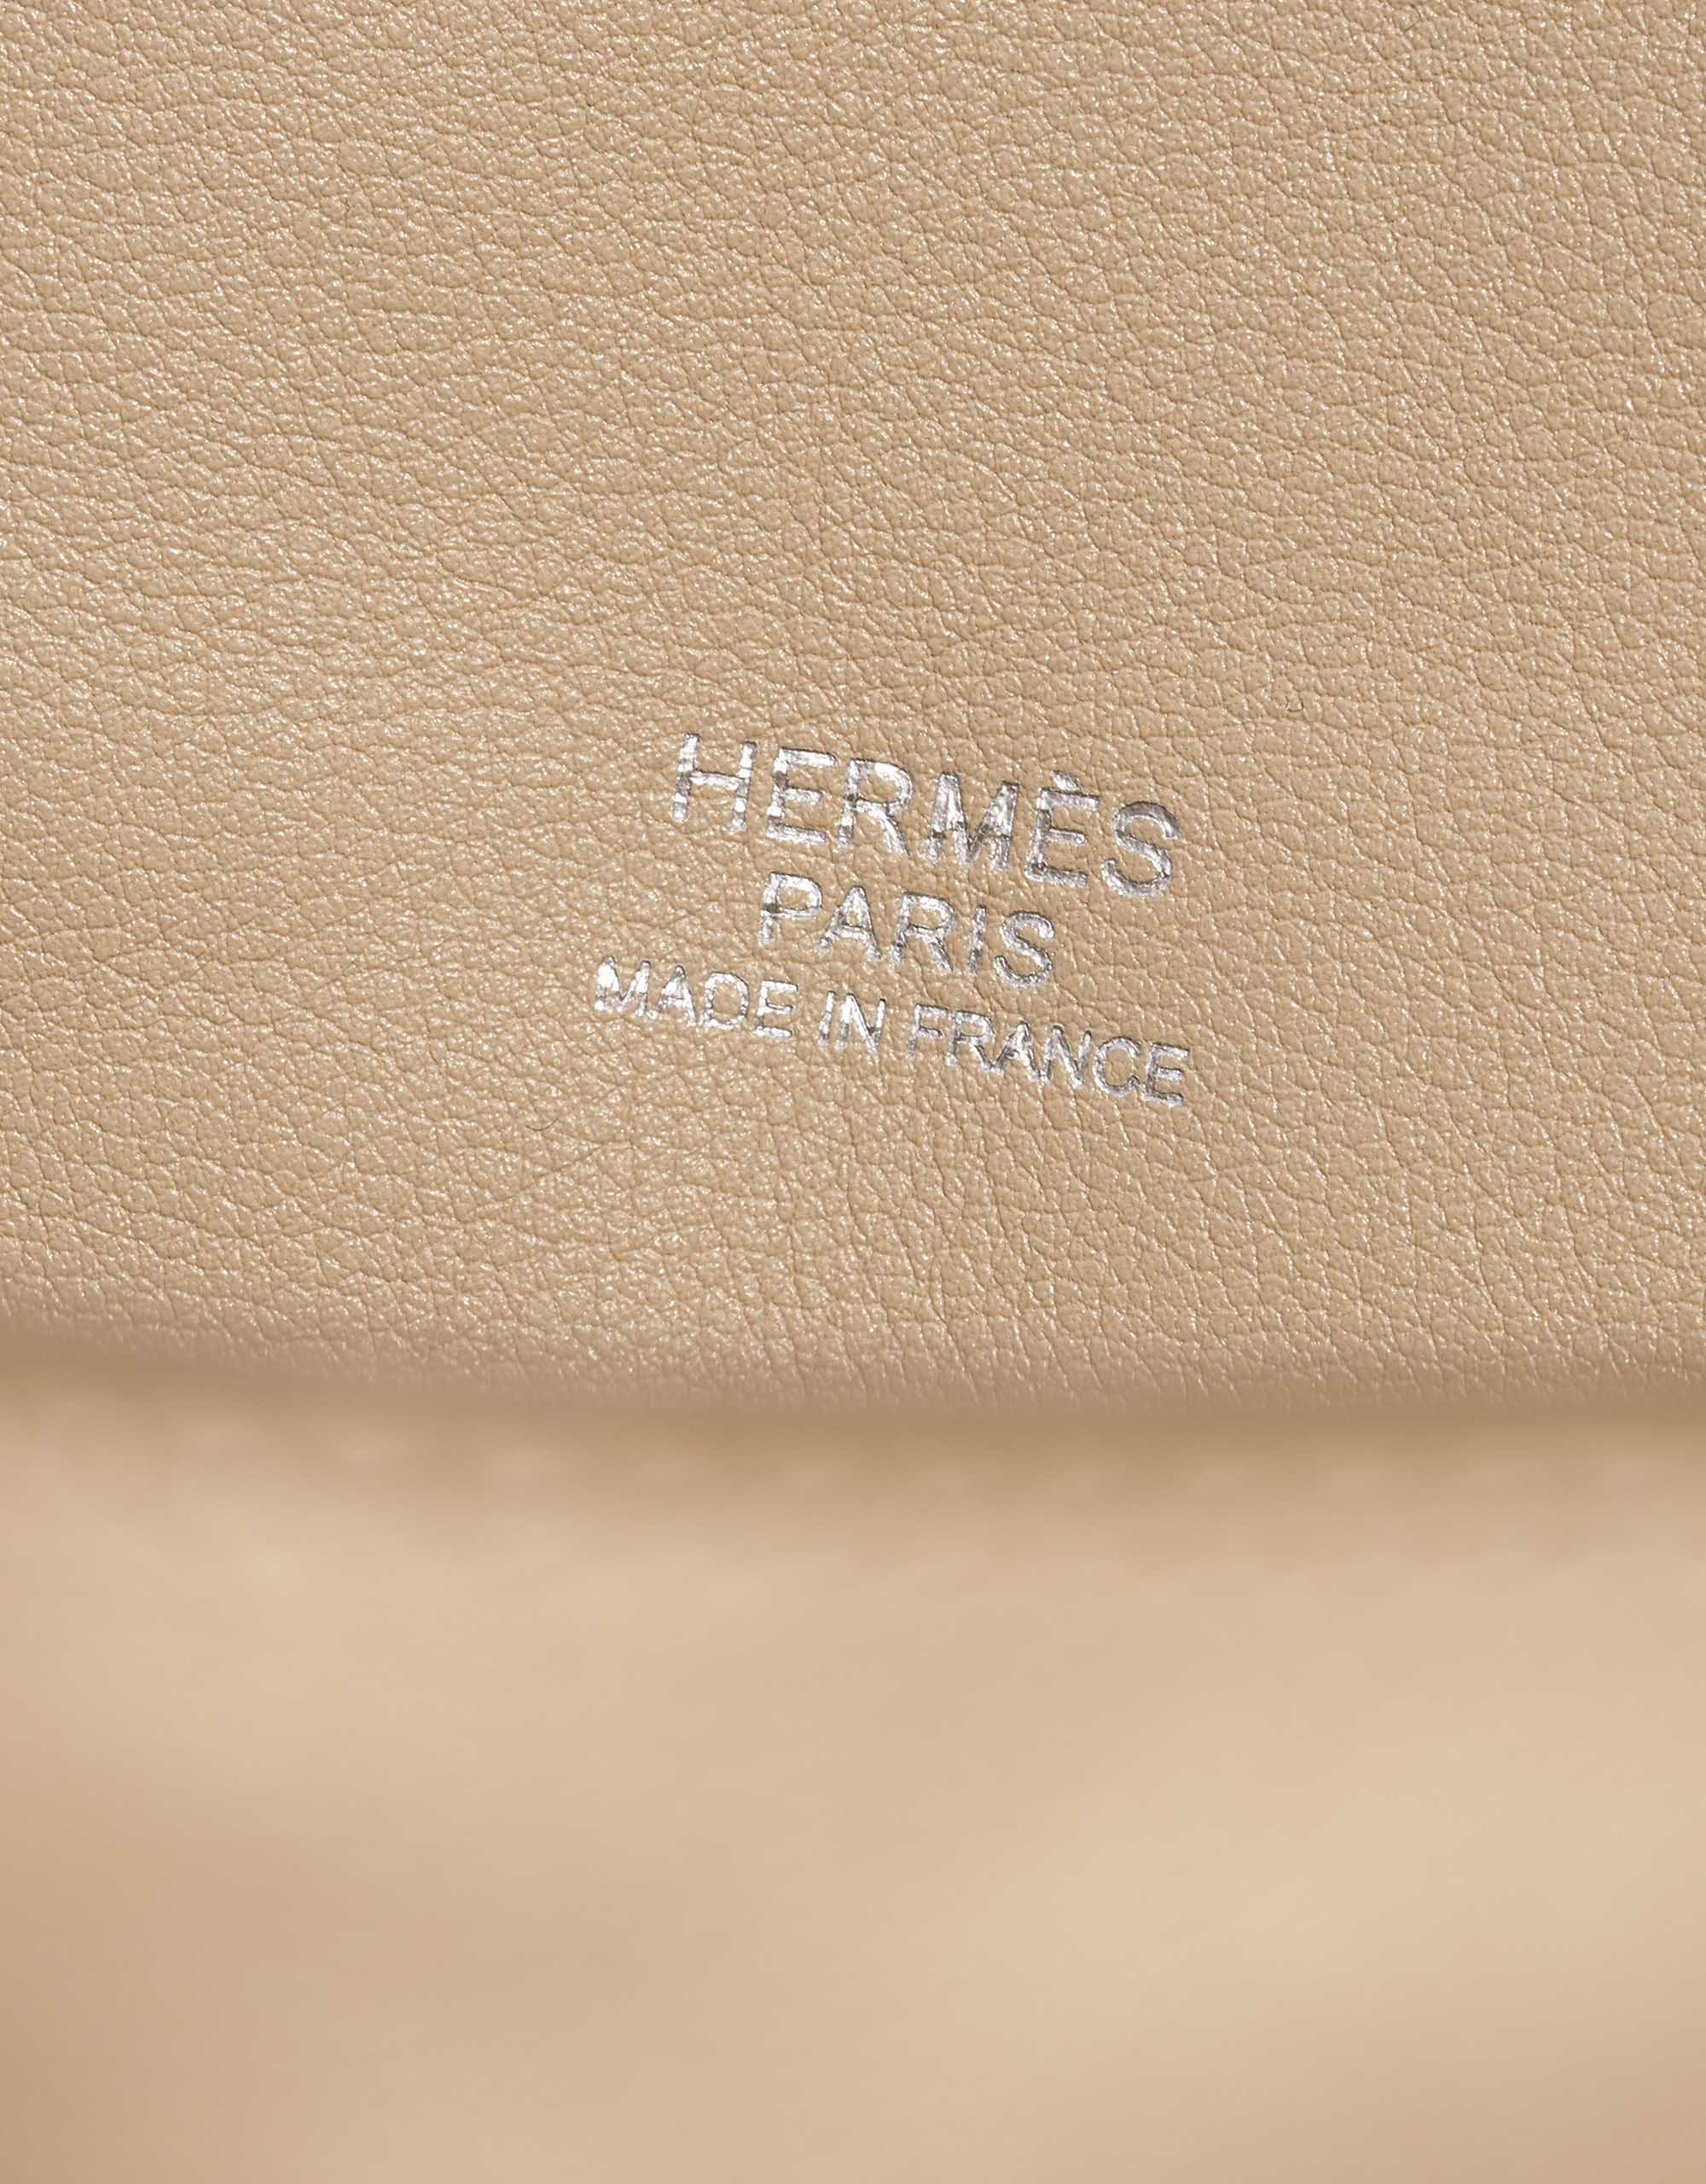 Day 18: The Berline Bag by Hermès